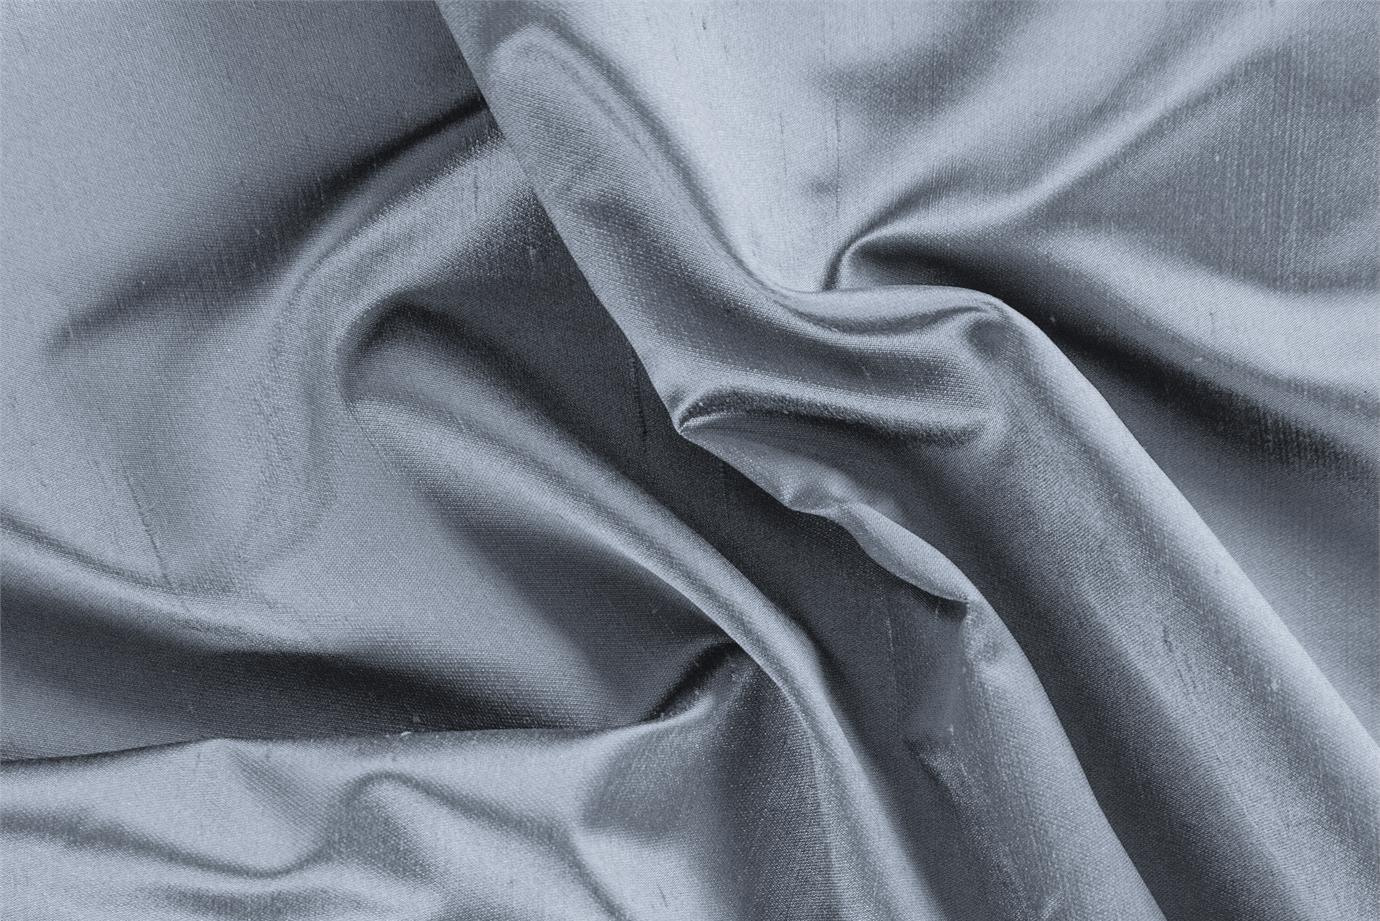 Blue Silk Shantung Satin Apparel Fabric UN000793